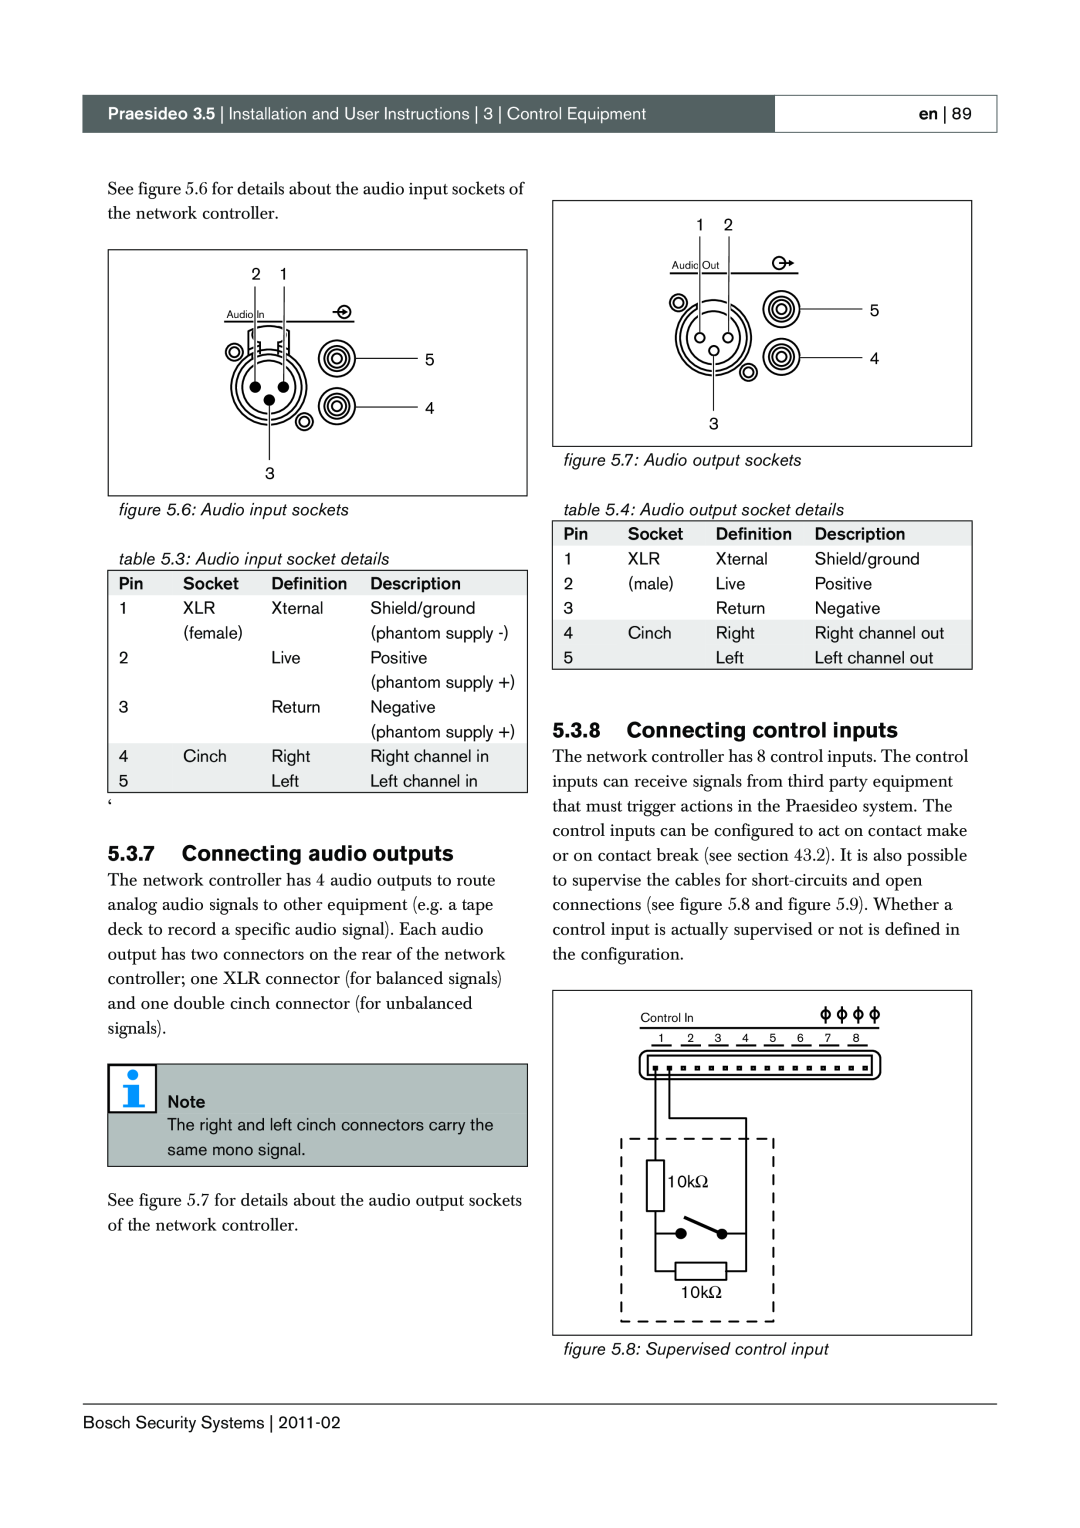 Bosch Appliances 3.5 manual 5.3.7Connecting audio outputs, 5.3.8Connecting control inputs, 6: Audio input sockets 